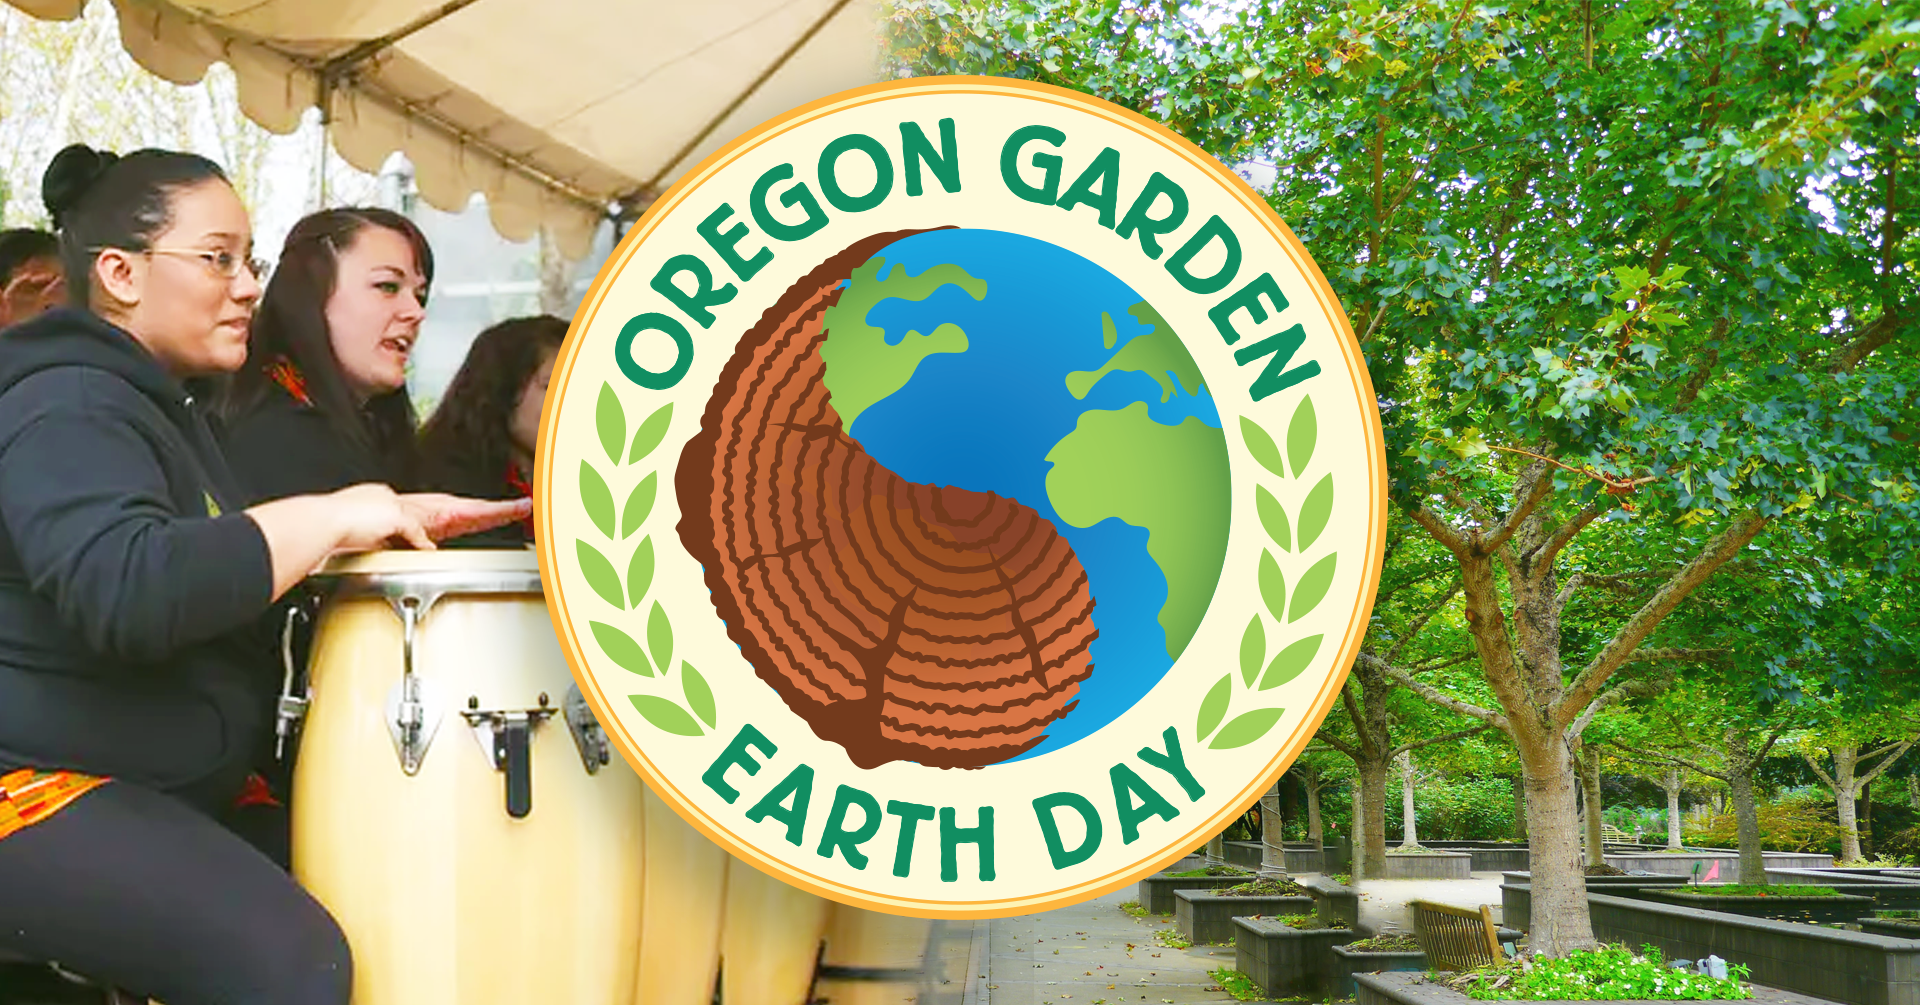 Earth Day at The Oregon Garden